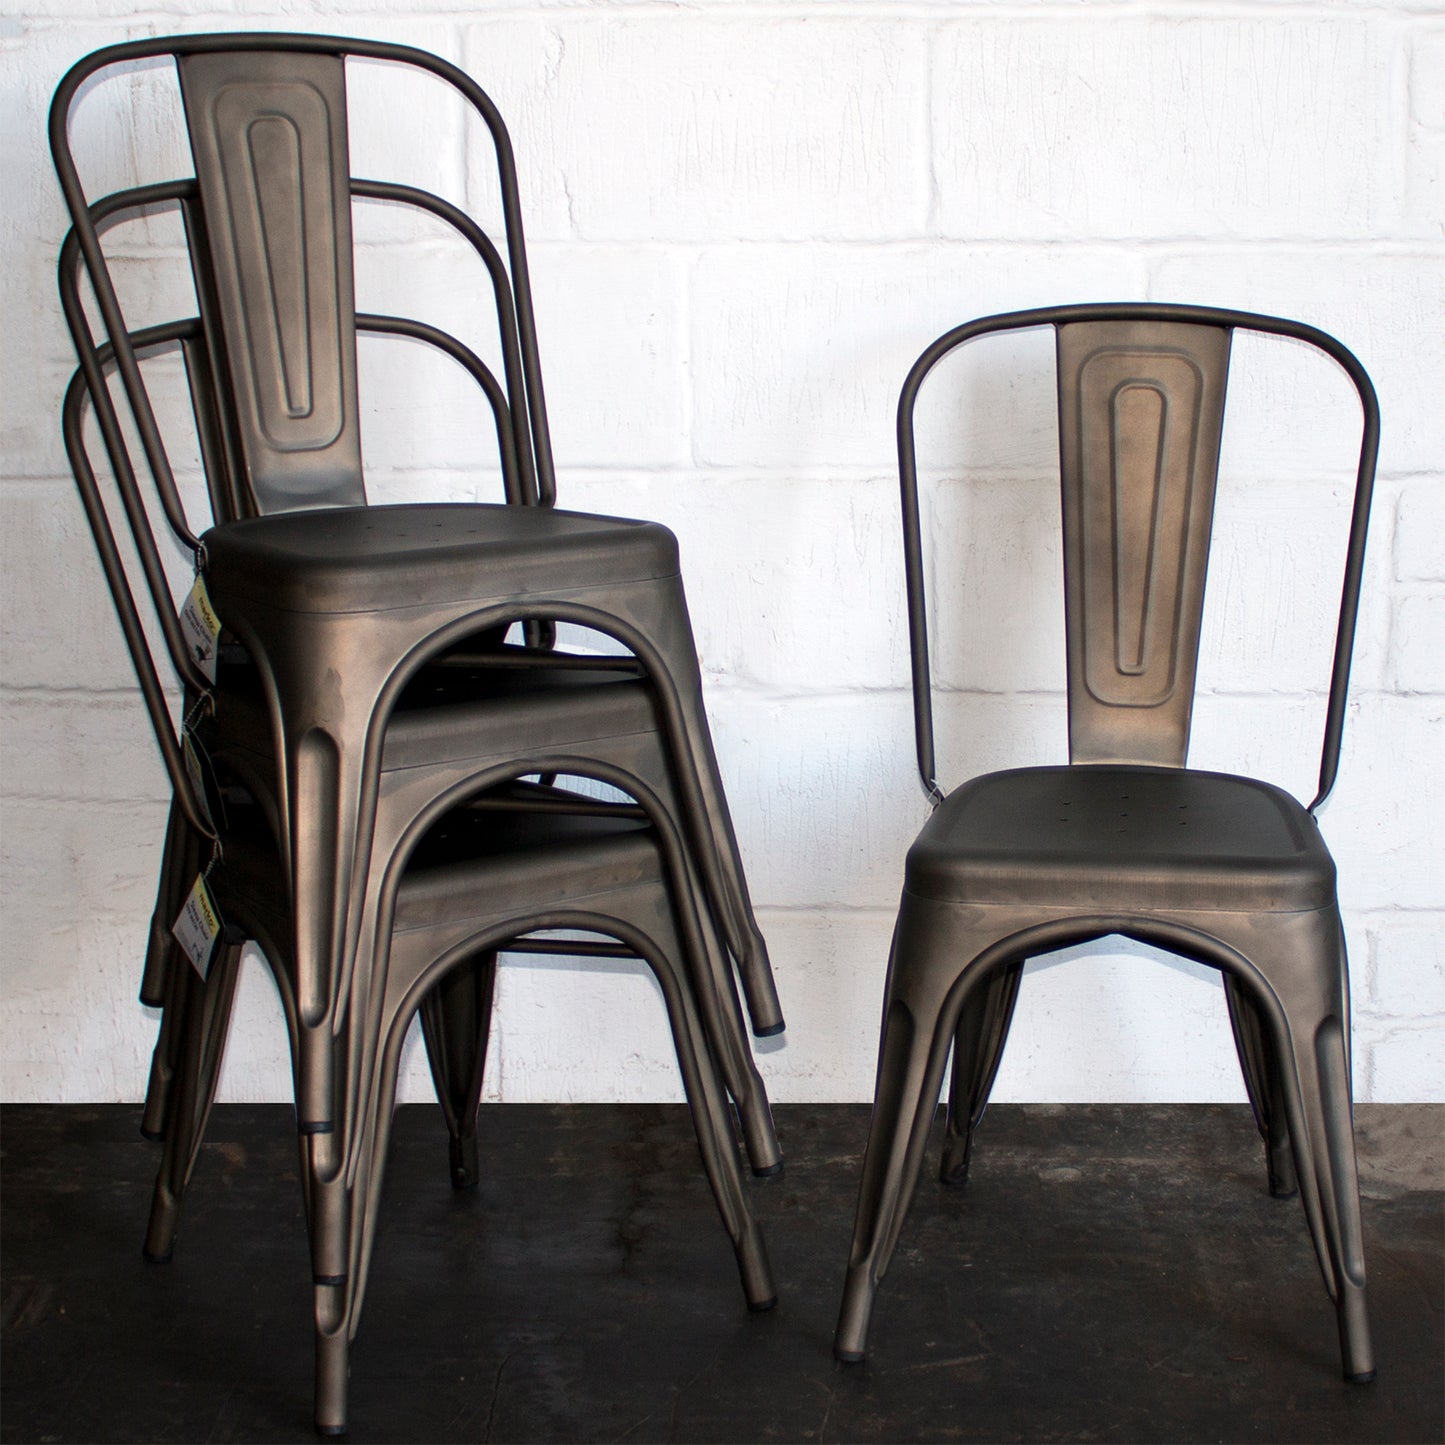 9PC Taranto Table & 8 Siena Chairs Set - Gun Metal Grey